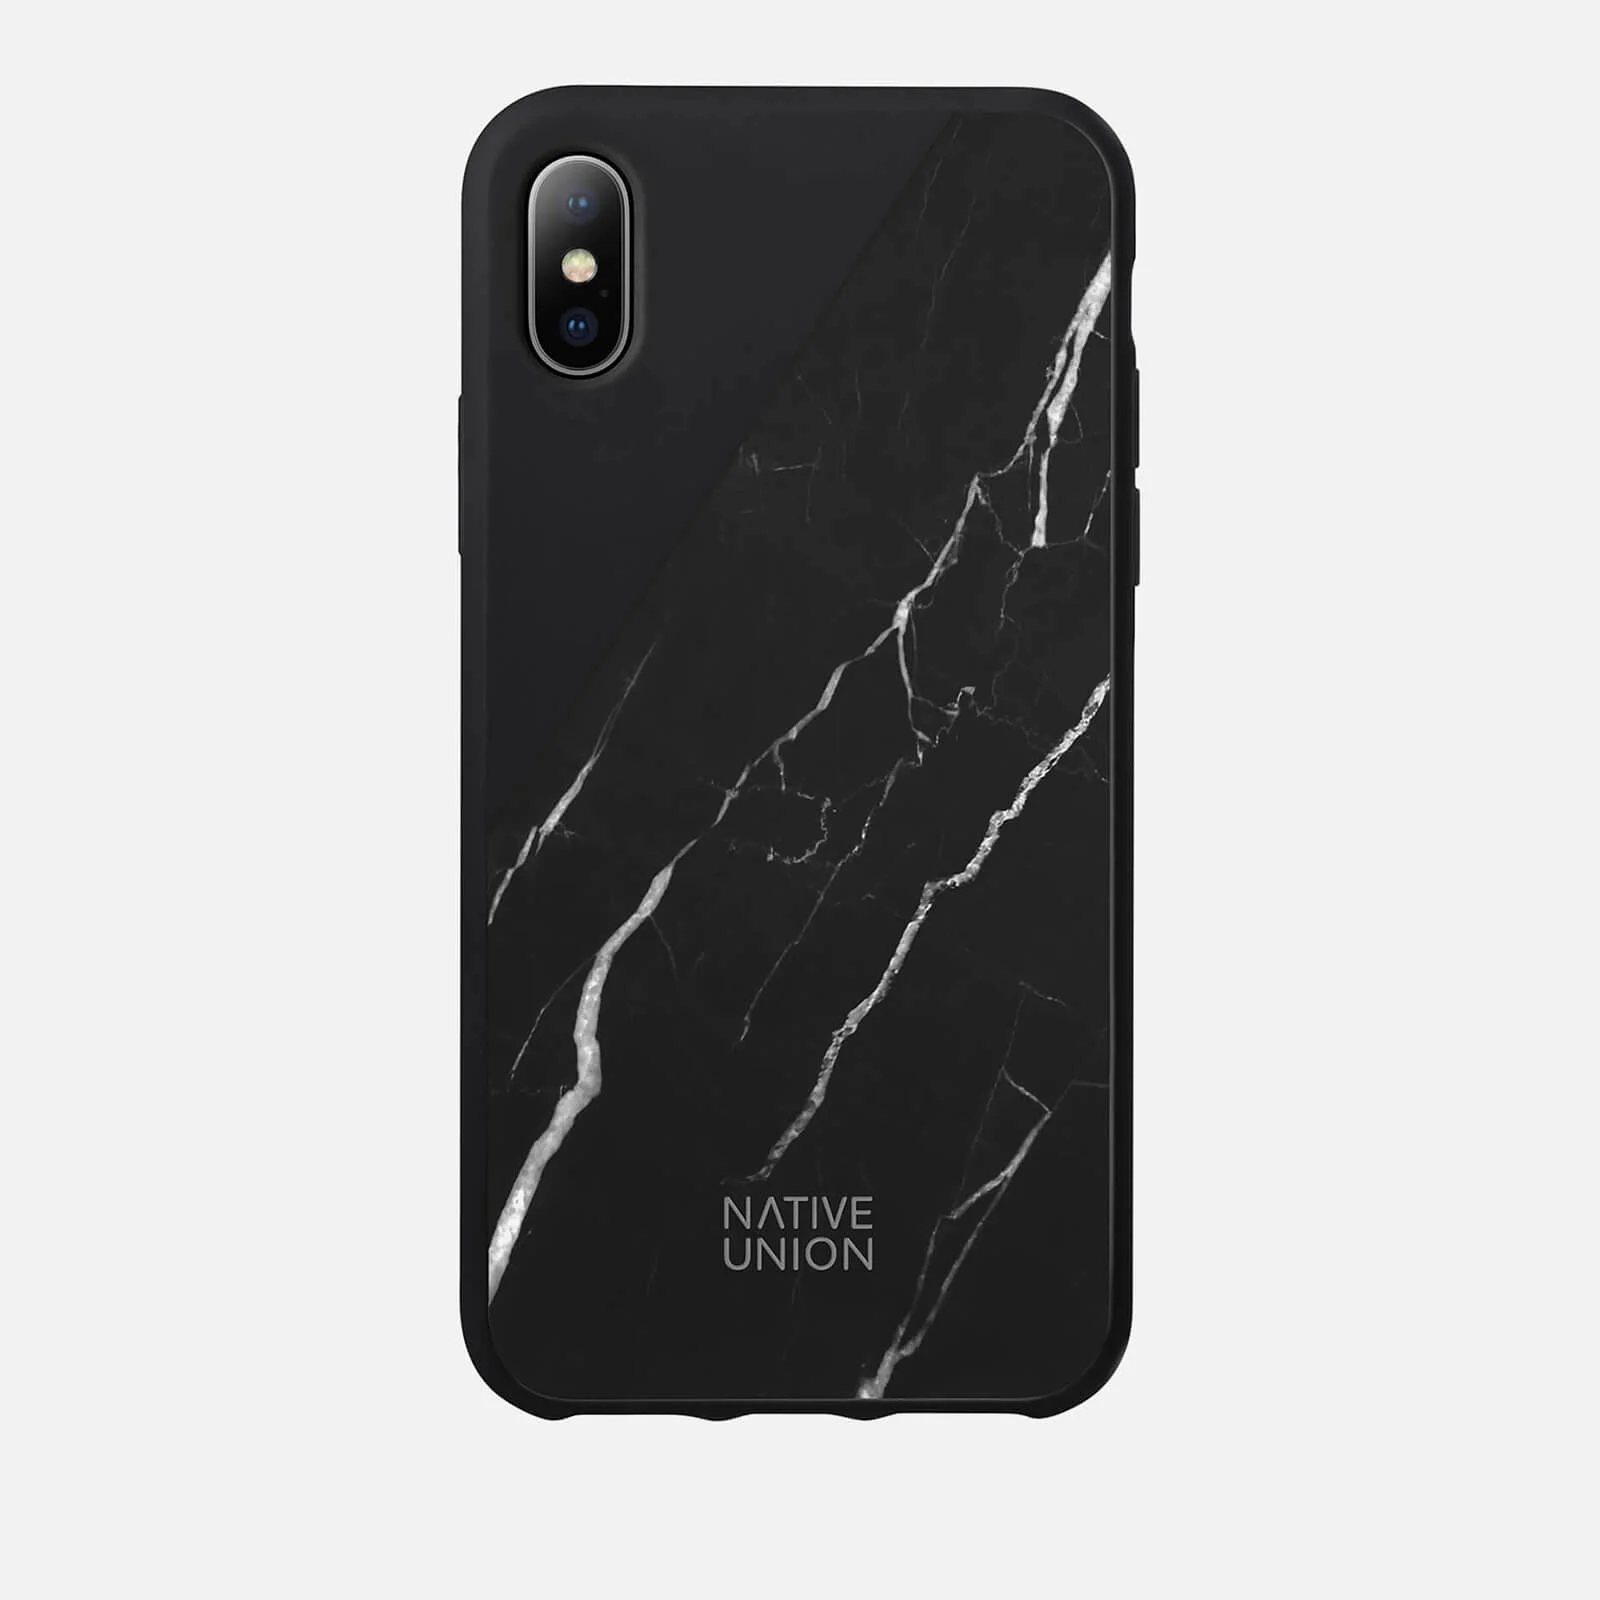 Native Union Clic Marble Metal iPhone X - Black Image 1